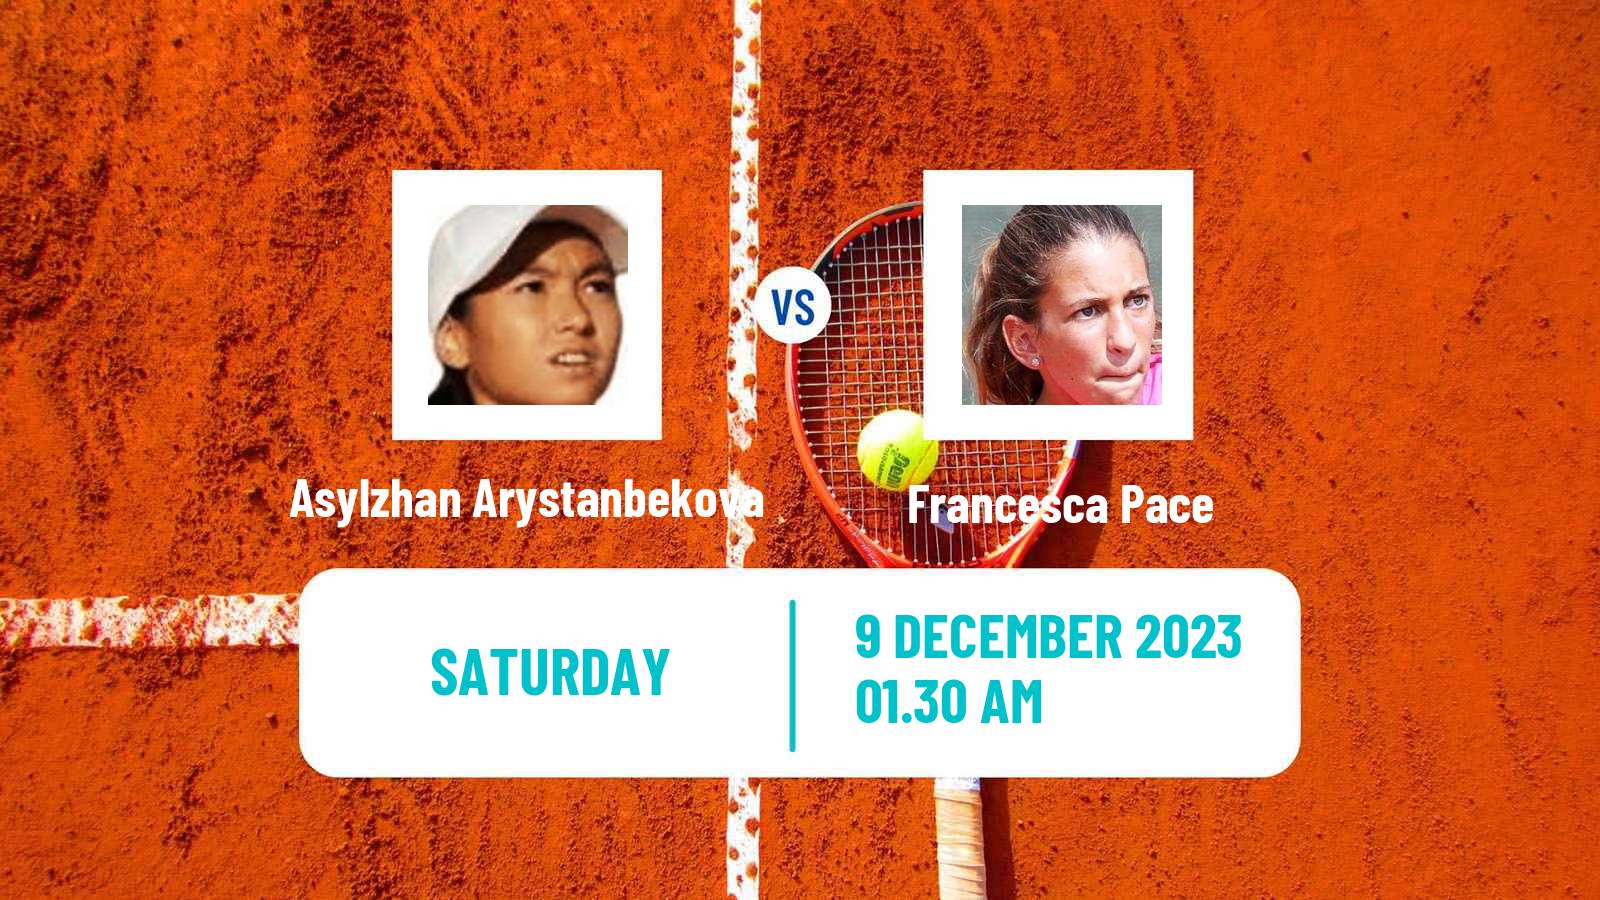 Tennis ITF W15 Antalya 21 Women Asylzhan Arystanbekova - Francesca Pace